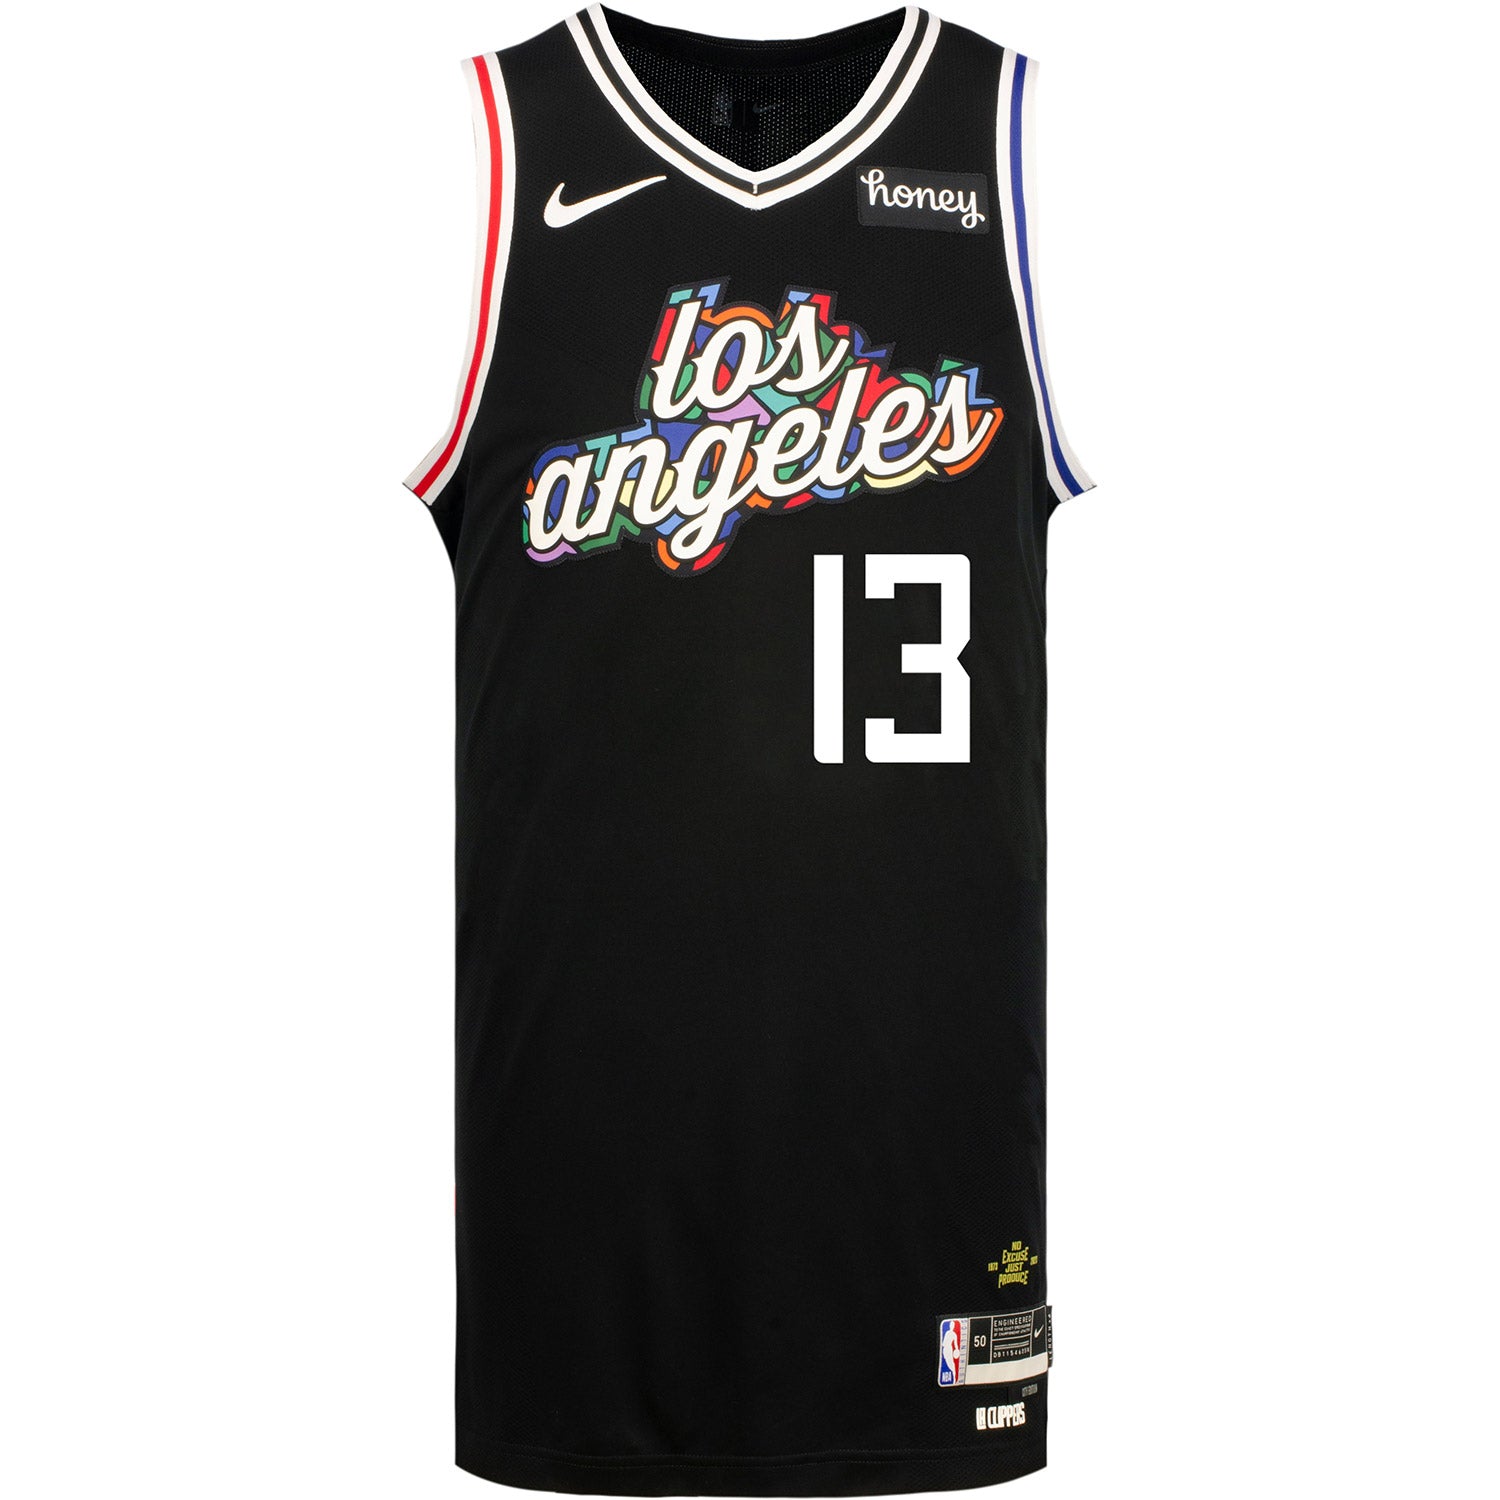 Los Angeles Clippers 22/23 City Edition Uniform: No excuse. Just